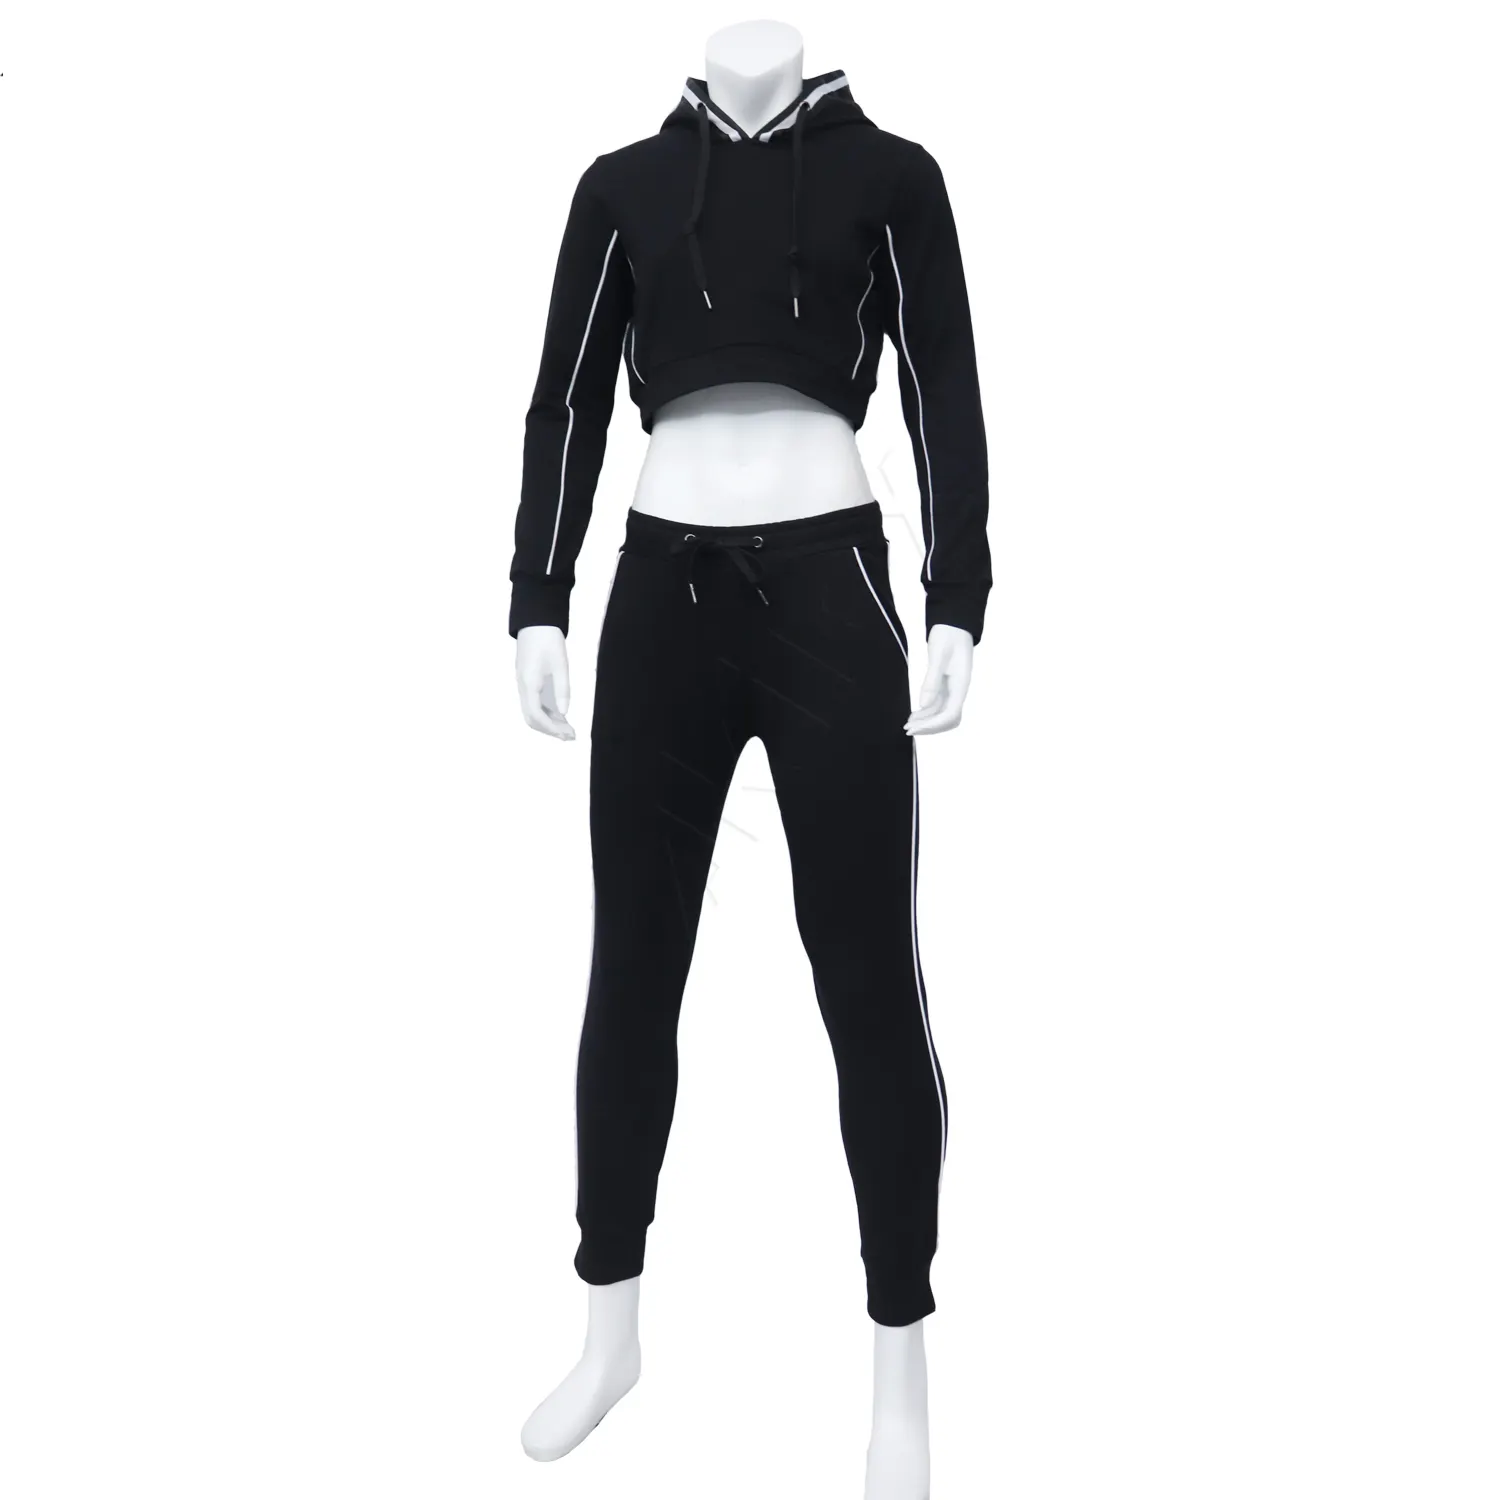 कस्टम महिलाओं योग पहनने Sweatsuit 2 टुकड़ा पैंट सेट फसल शीर्ष डिजाइनर सूट स्वास्थ्य टहलना रनिंग जैकेट